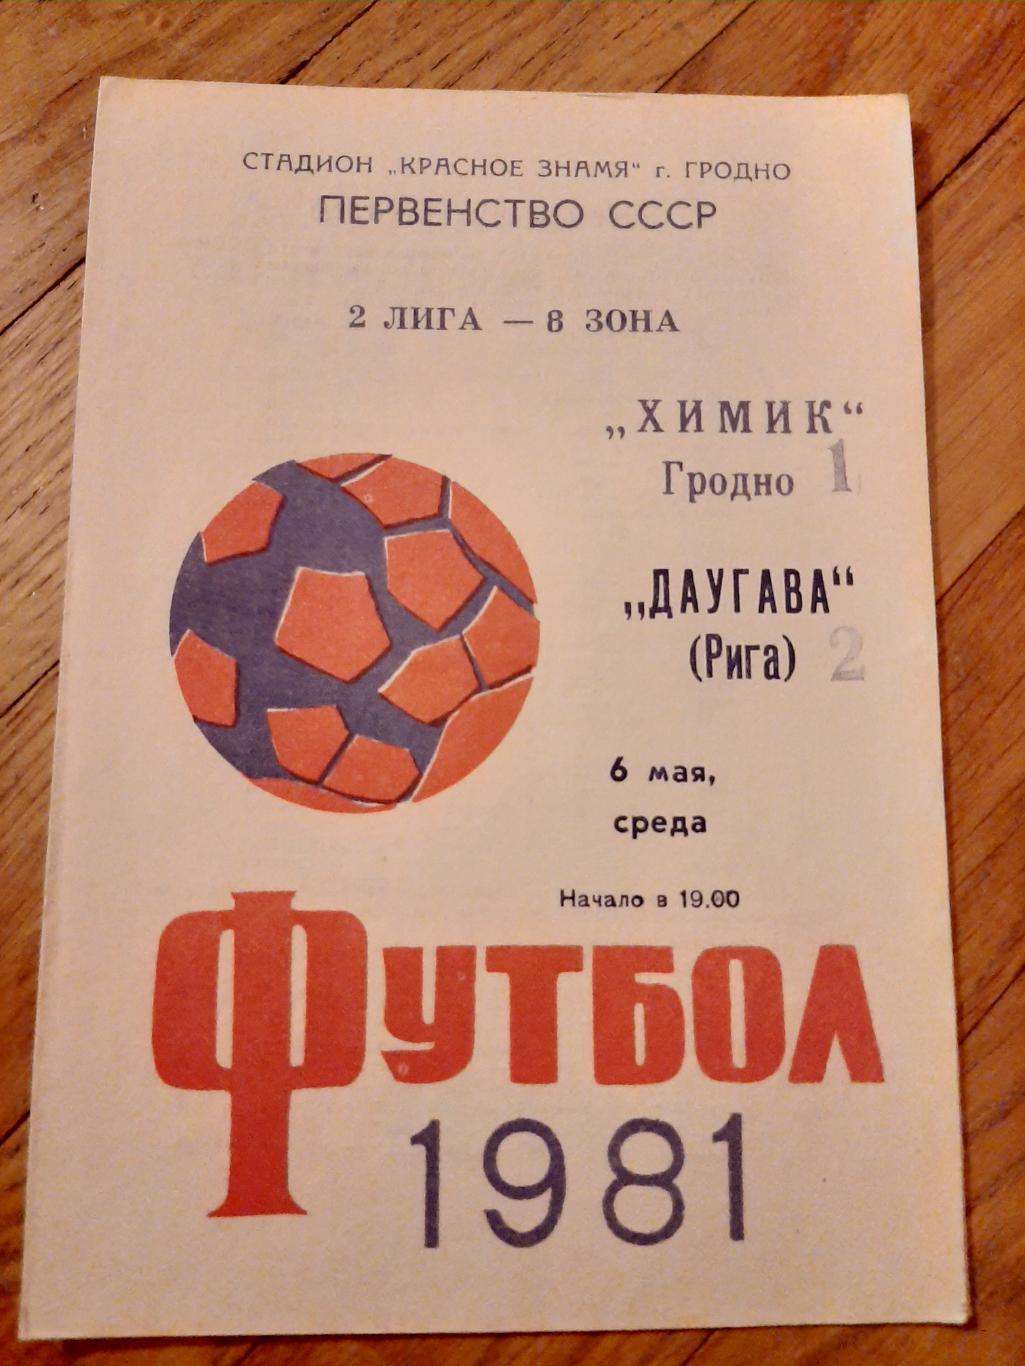 Химик (Гродно) - Даугава (Рига) 1981